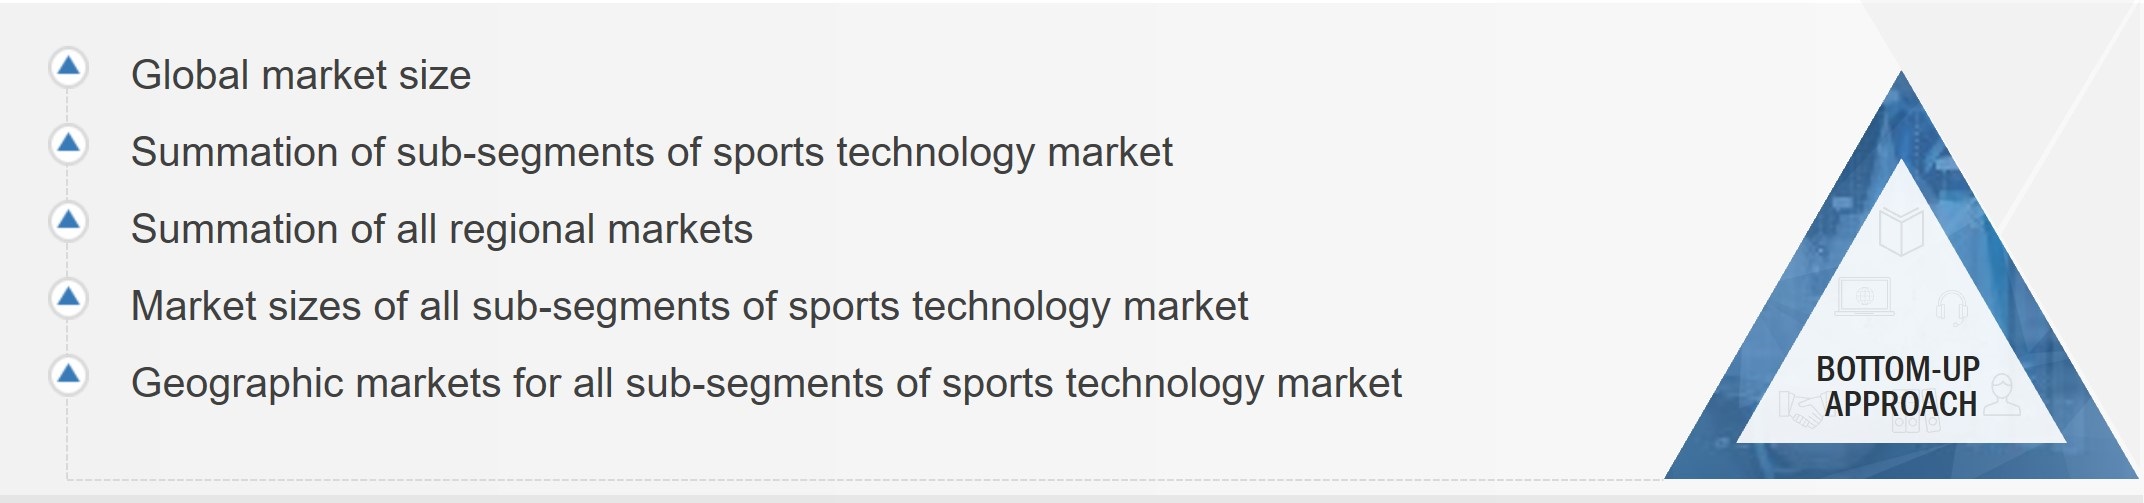 Sports Technology Market Size, and Bottom-up Approach 